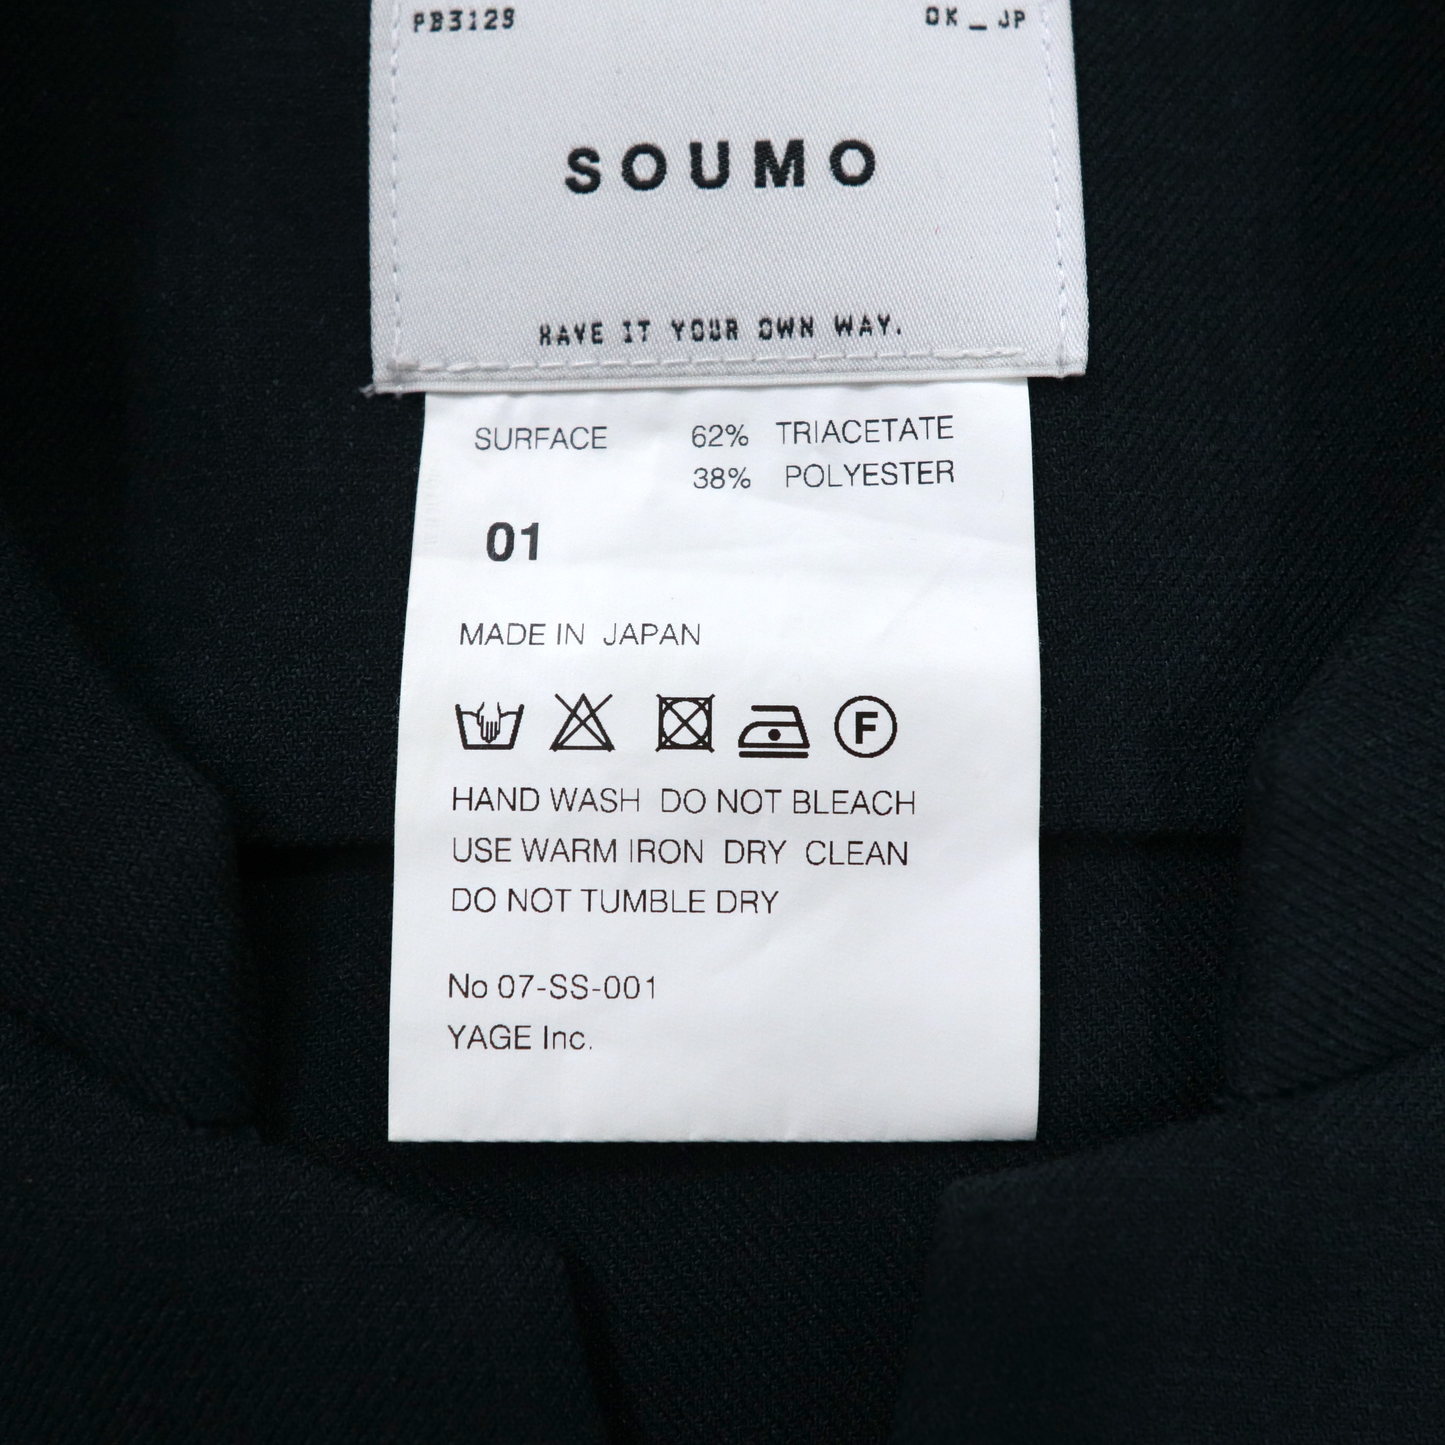 SOUMO ノーカラー シャツ ジャケット 羽織 01 グレー トリアセテート 1LDK取扱い 日本製